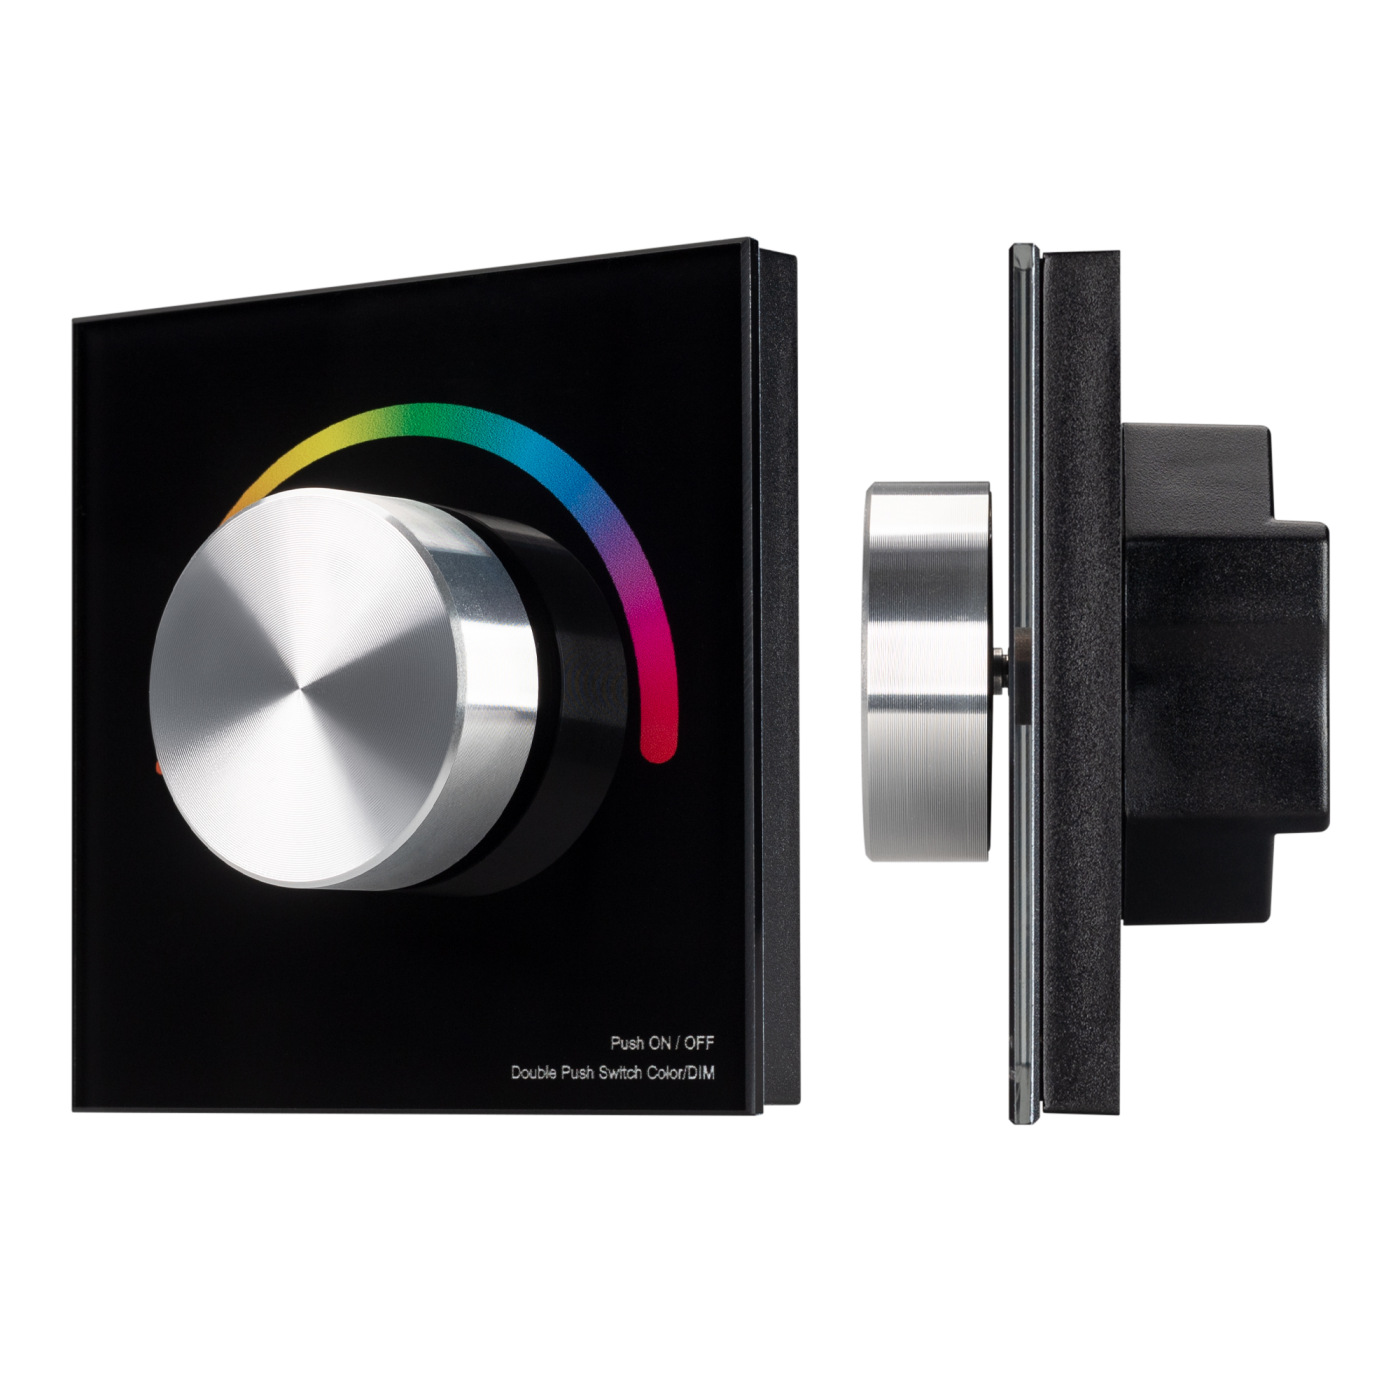 Панель SMART-P5-RGB-G-IN Black (3V, Rotary, 2.4G) (Arlight, IP20 Пластик, 5 лет) комплект кухонной опоры и клипсы пластик чёрный 4 шт